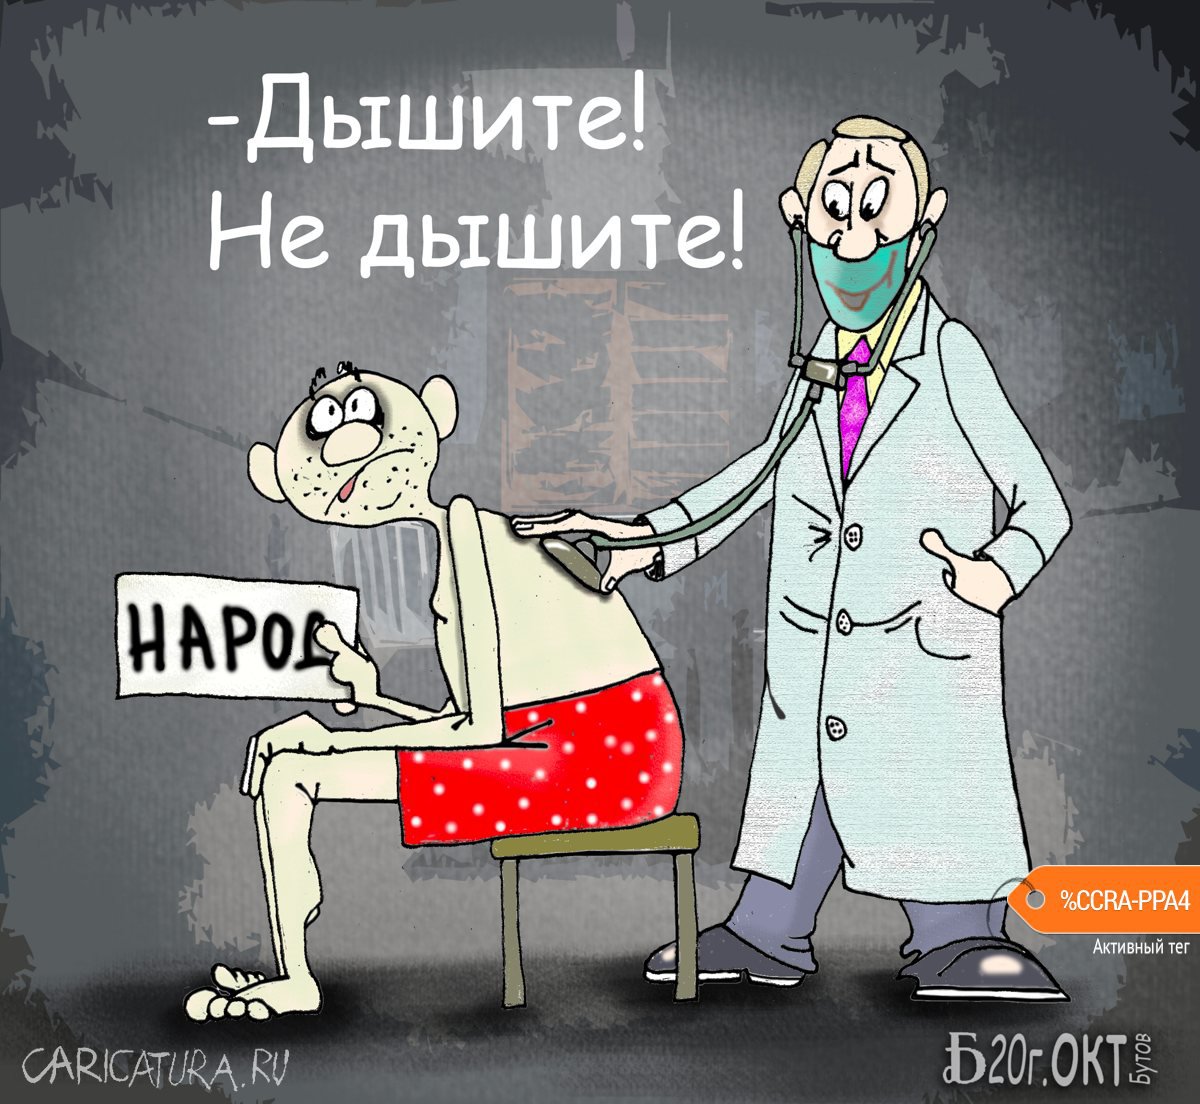 Карикатура "Про свободное дыхание", Борис Демин